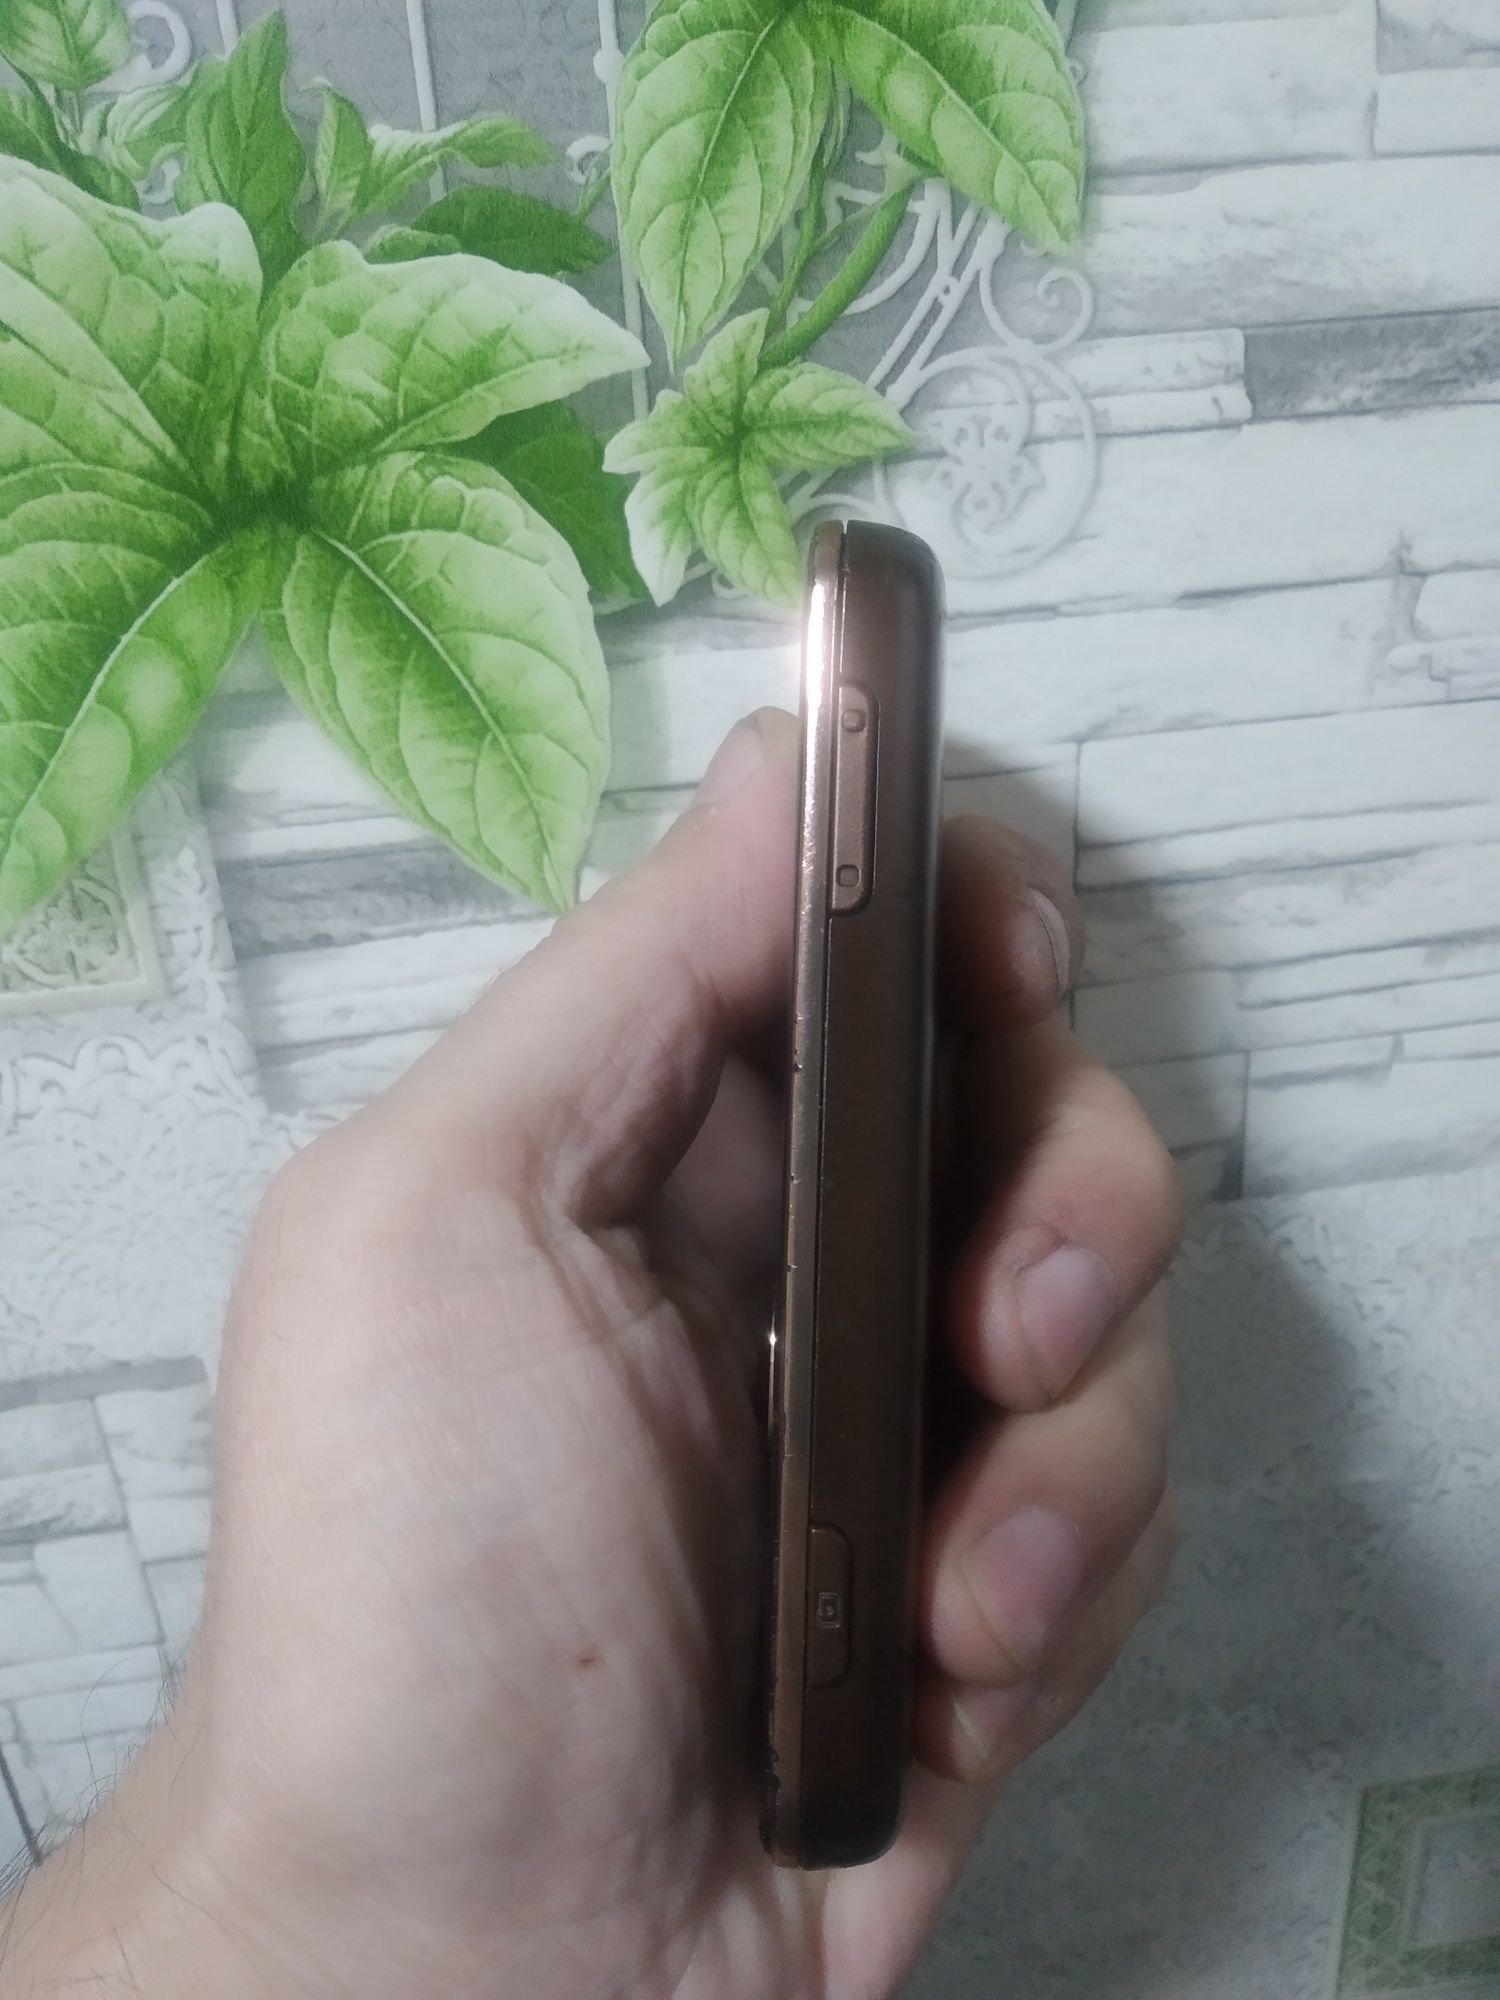 Nokia 3806(R UIM карточный) Perfectum